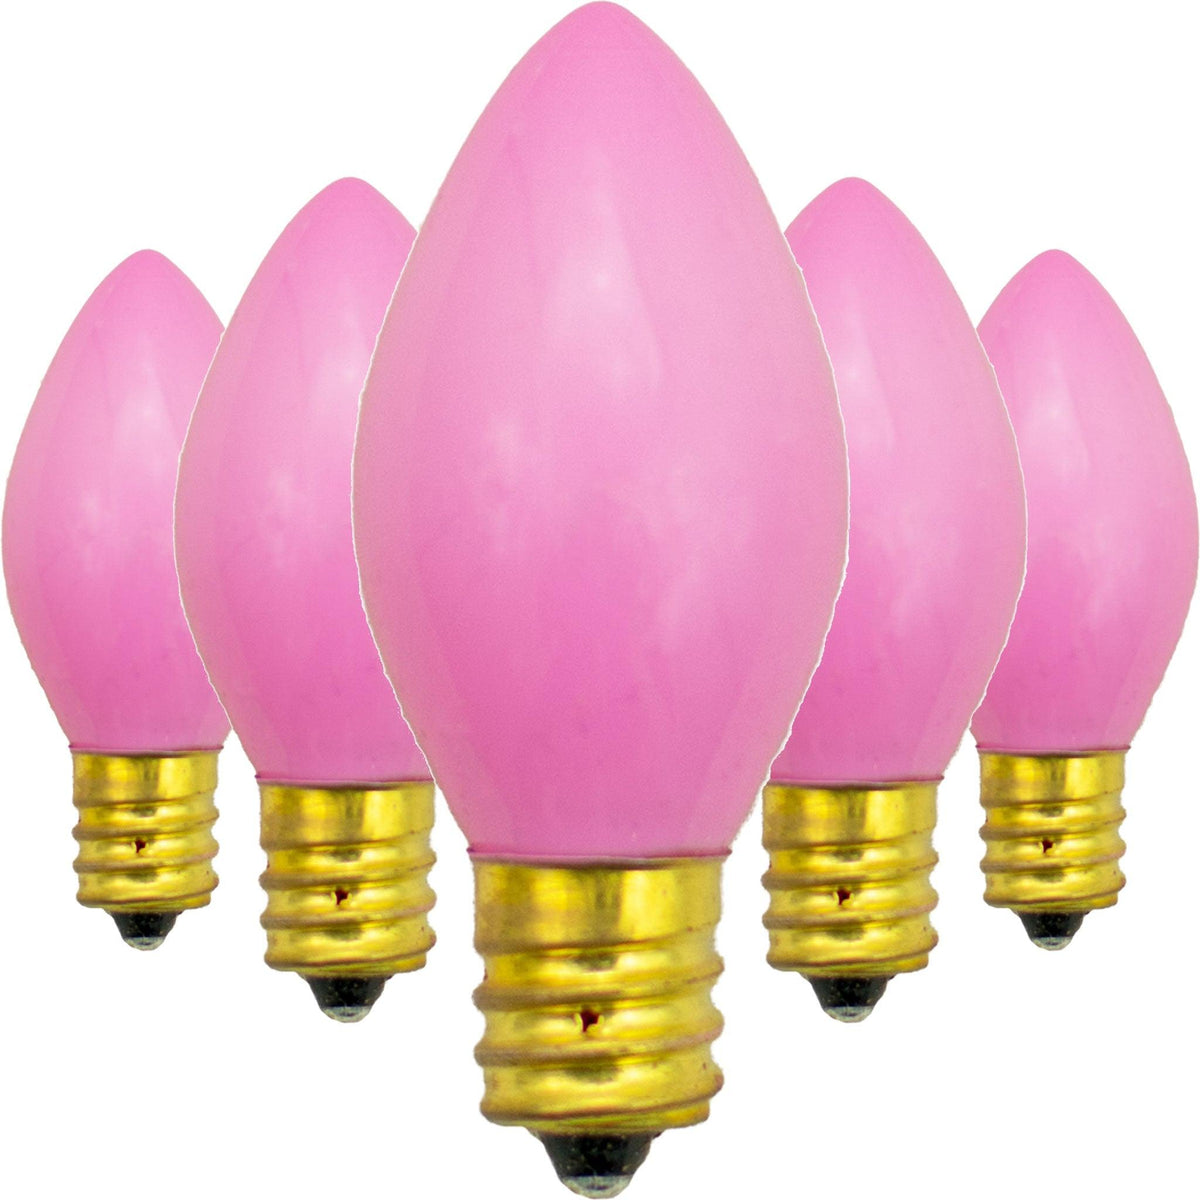 Buy brand new boxes of C-7 & C-9 Solid Ceramic Pink Christmas Light Bulbs at LeeDisplay.com